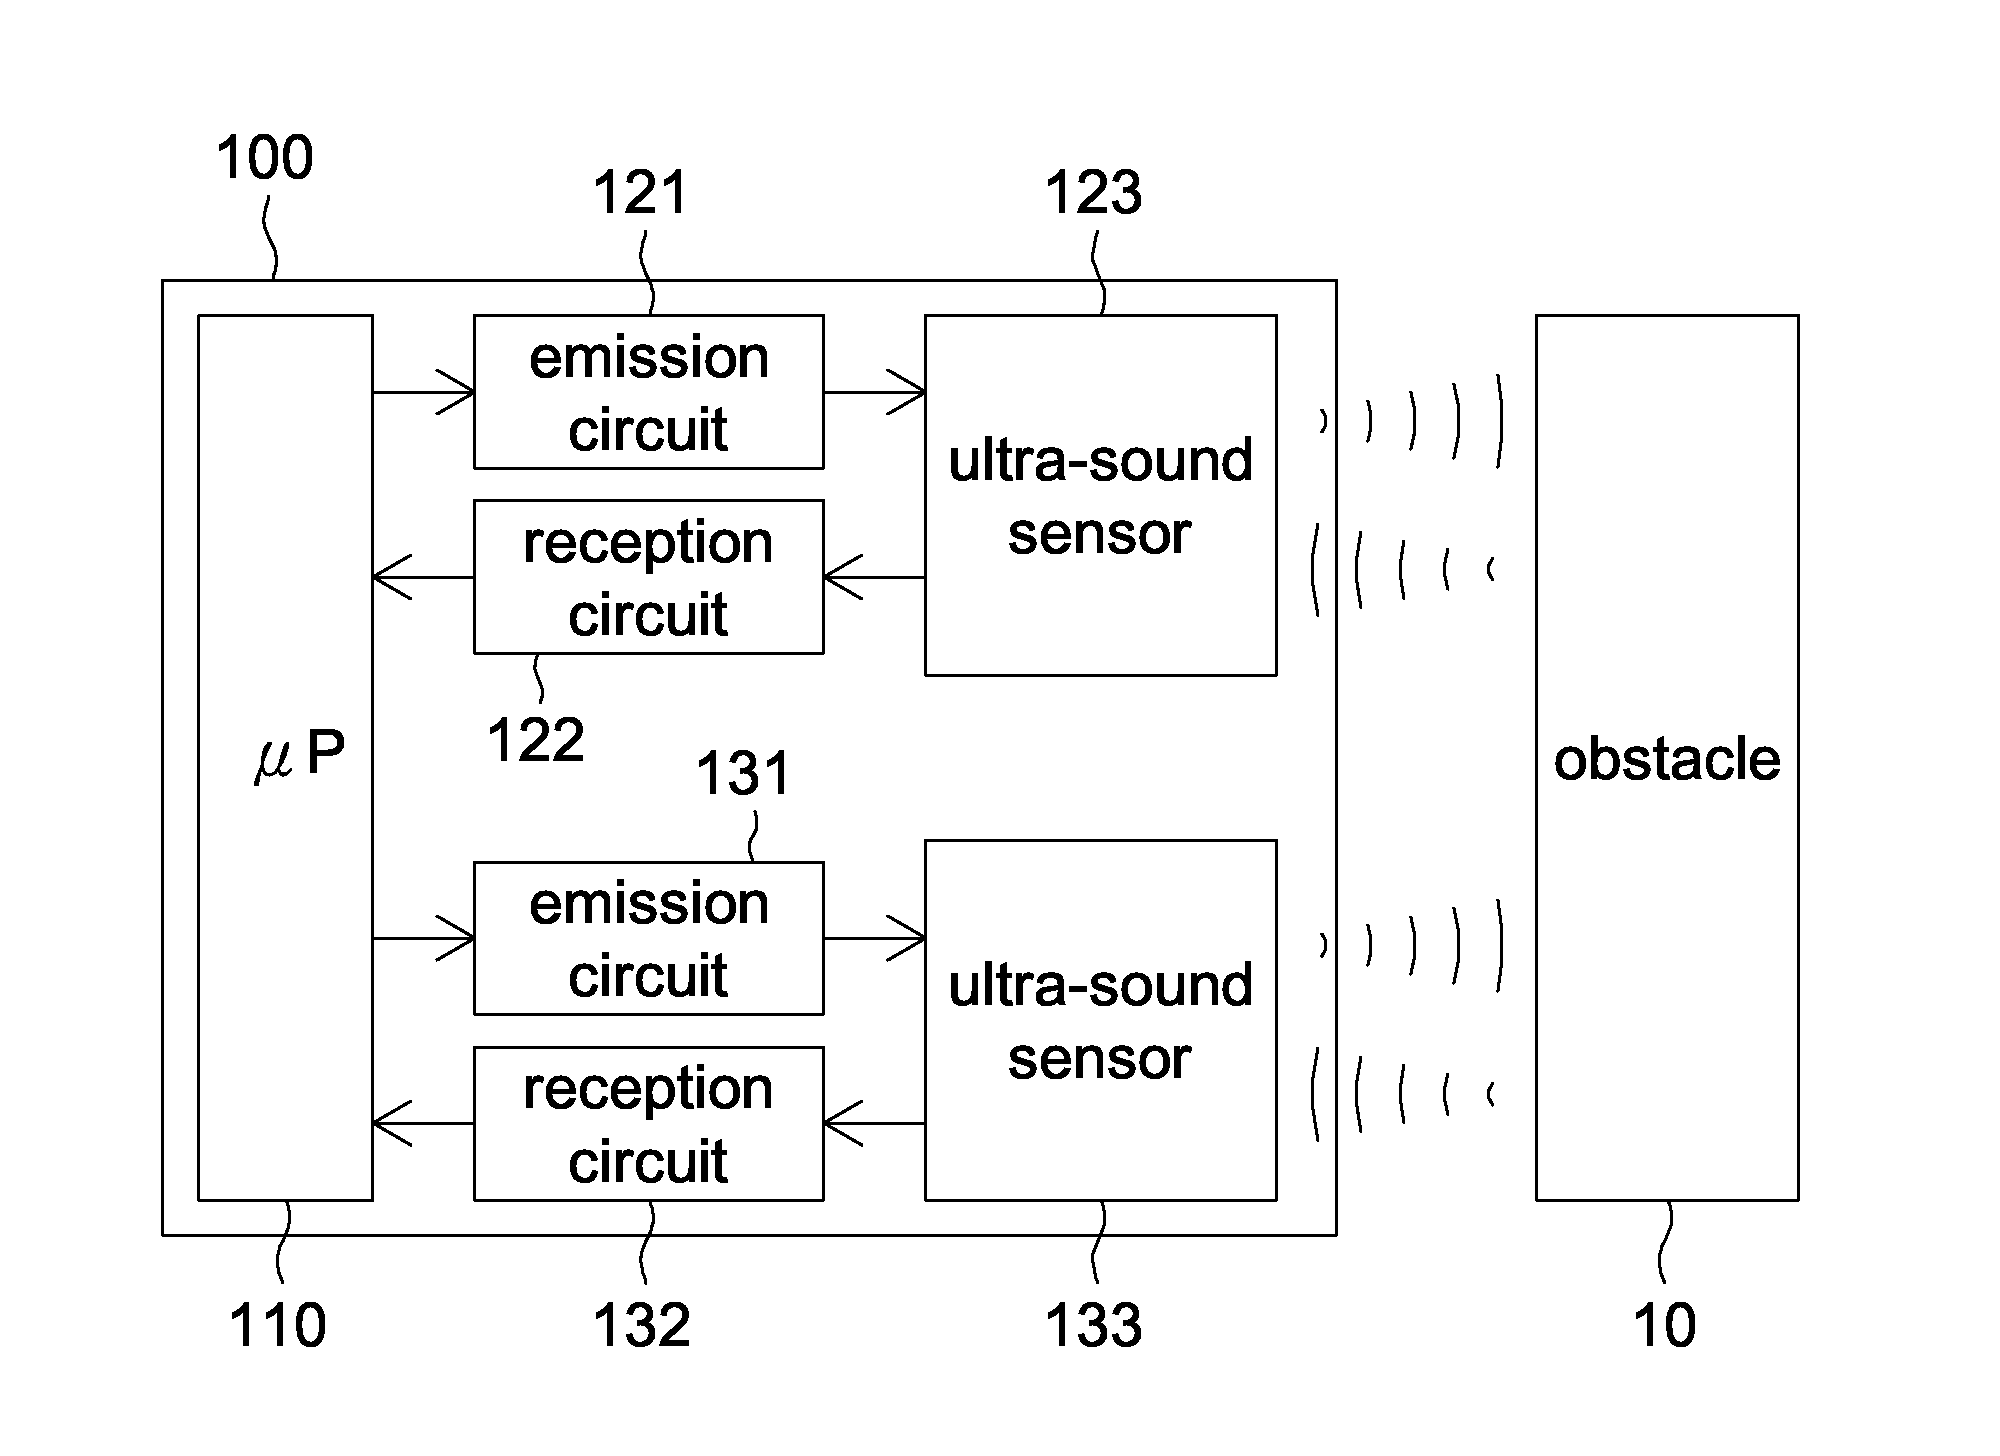 Operating method for an ultra-sound sensor